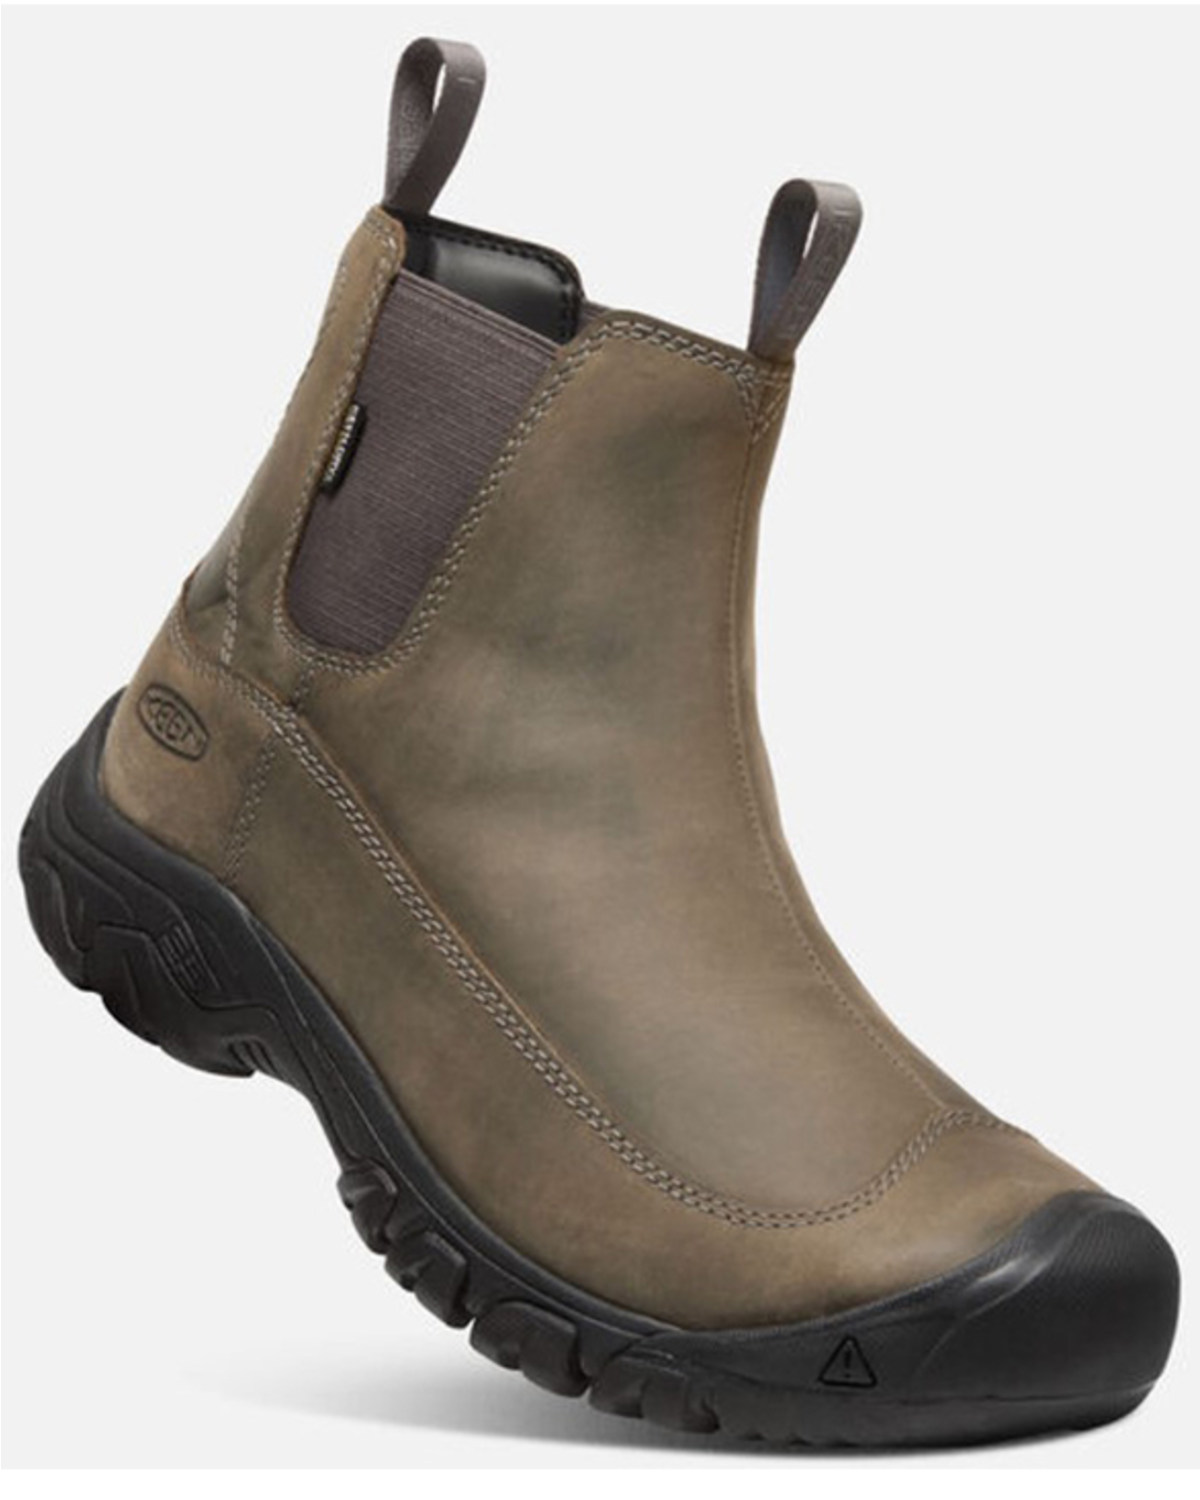 Keen Men's Anchorage III Waterproof Hiking Boots - Soft Toe